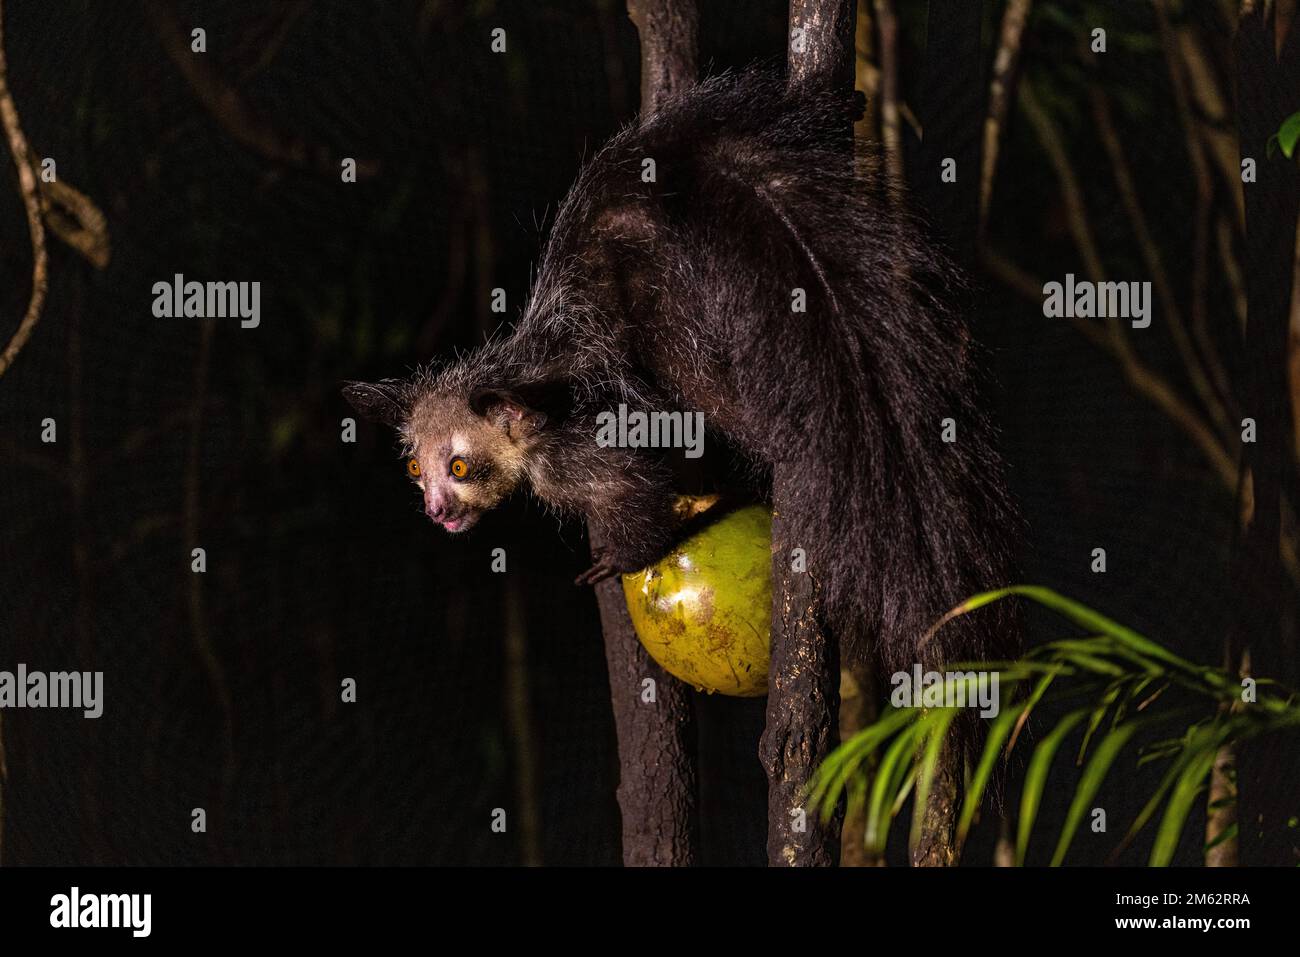 Aye-aye lemur in tree, sawing open coconuts at Palmarium Reserve, Eastern Madagascar, Africa Stock Photo